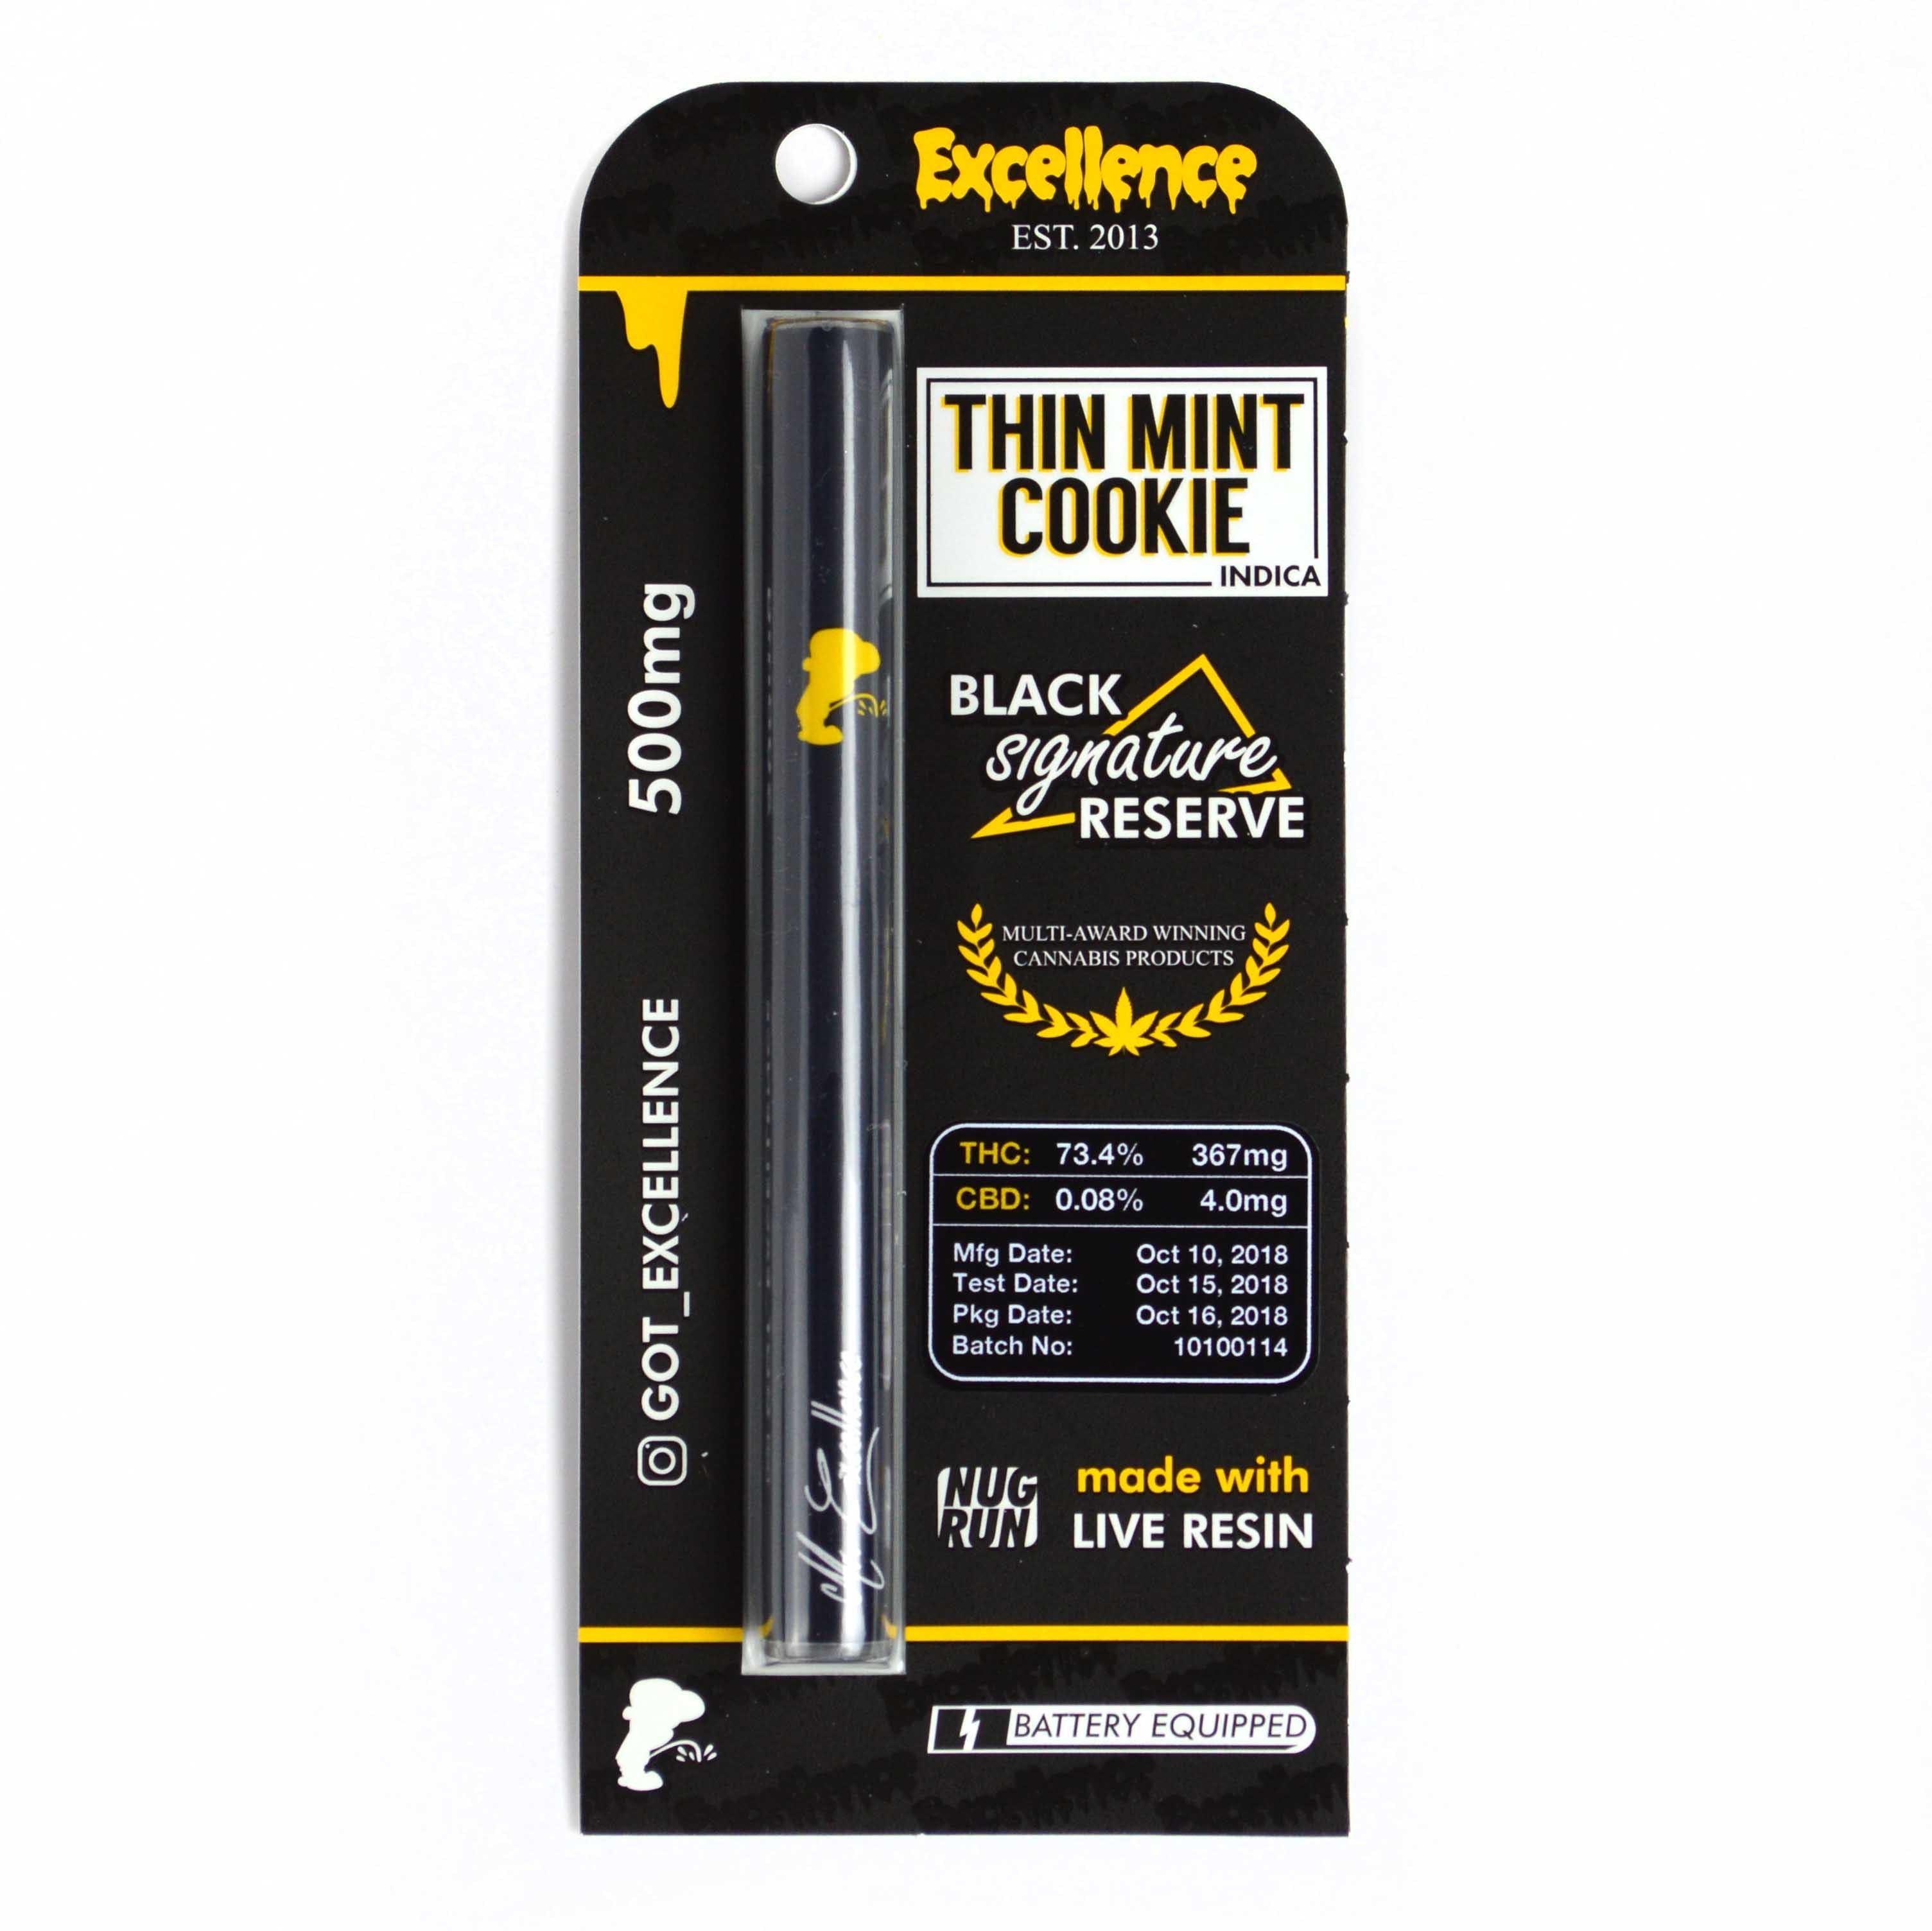 Thin Mint Cookie - Black Signature Disposable